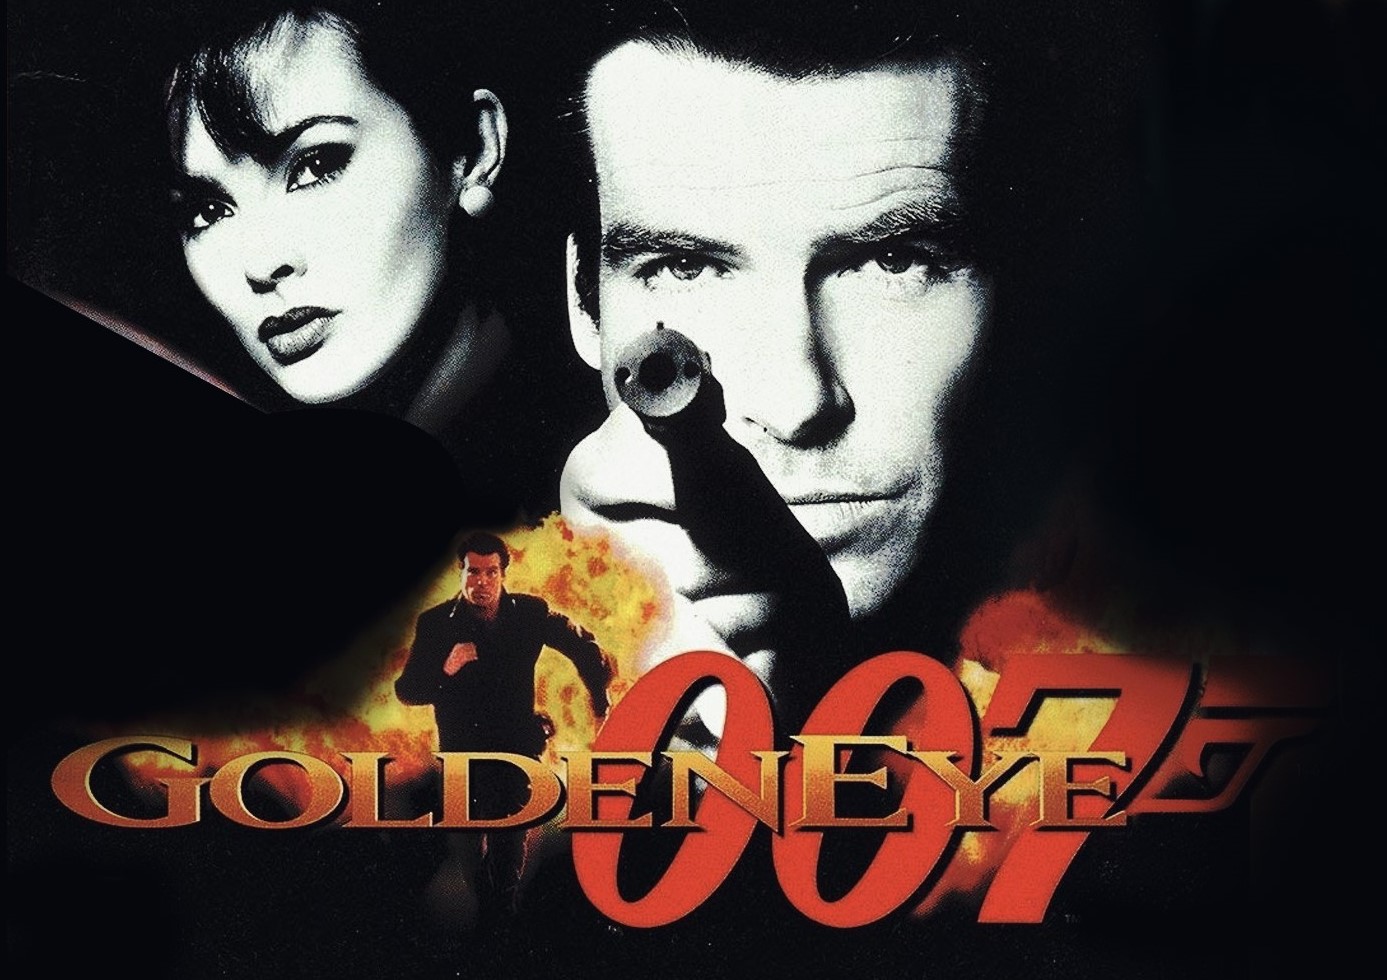 GoldenEye 007: Over 231 million downloads of leaked HD remaster